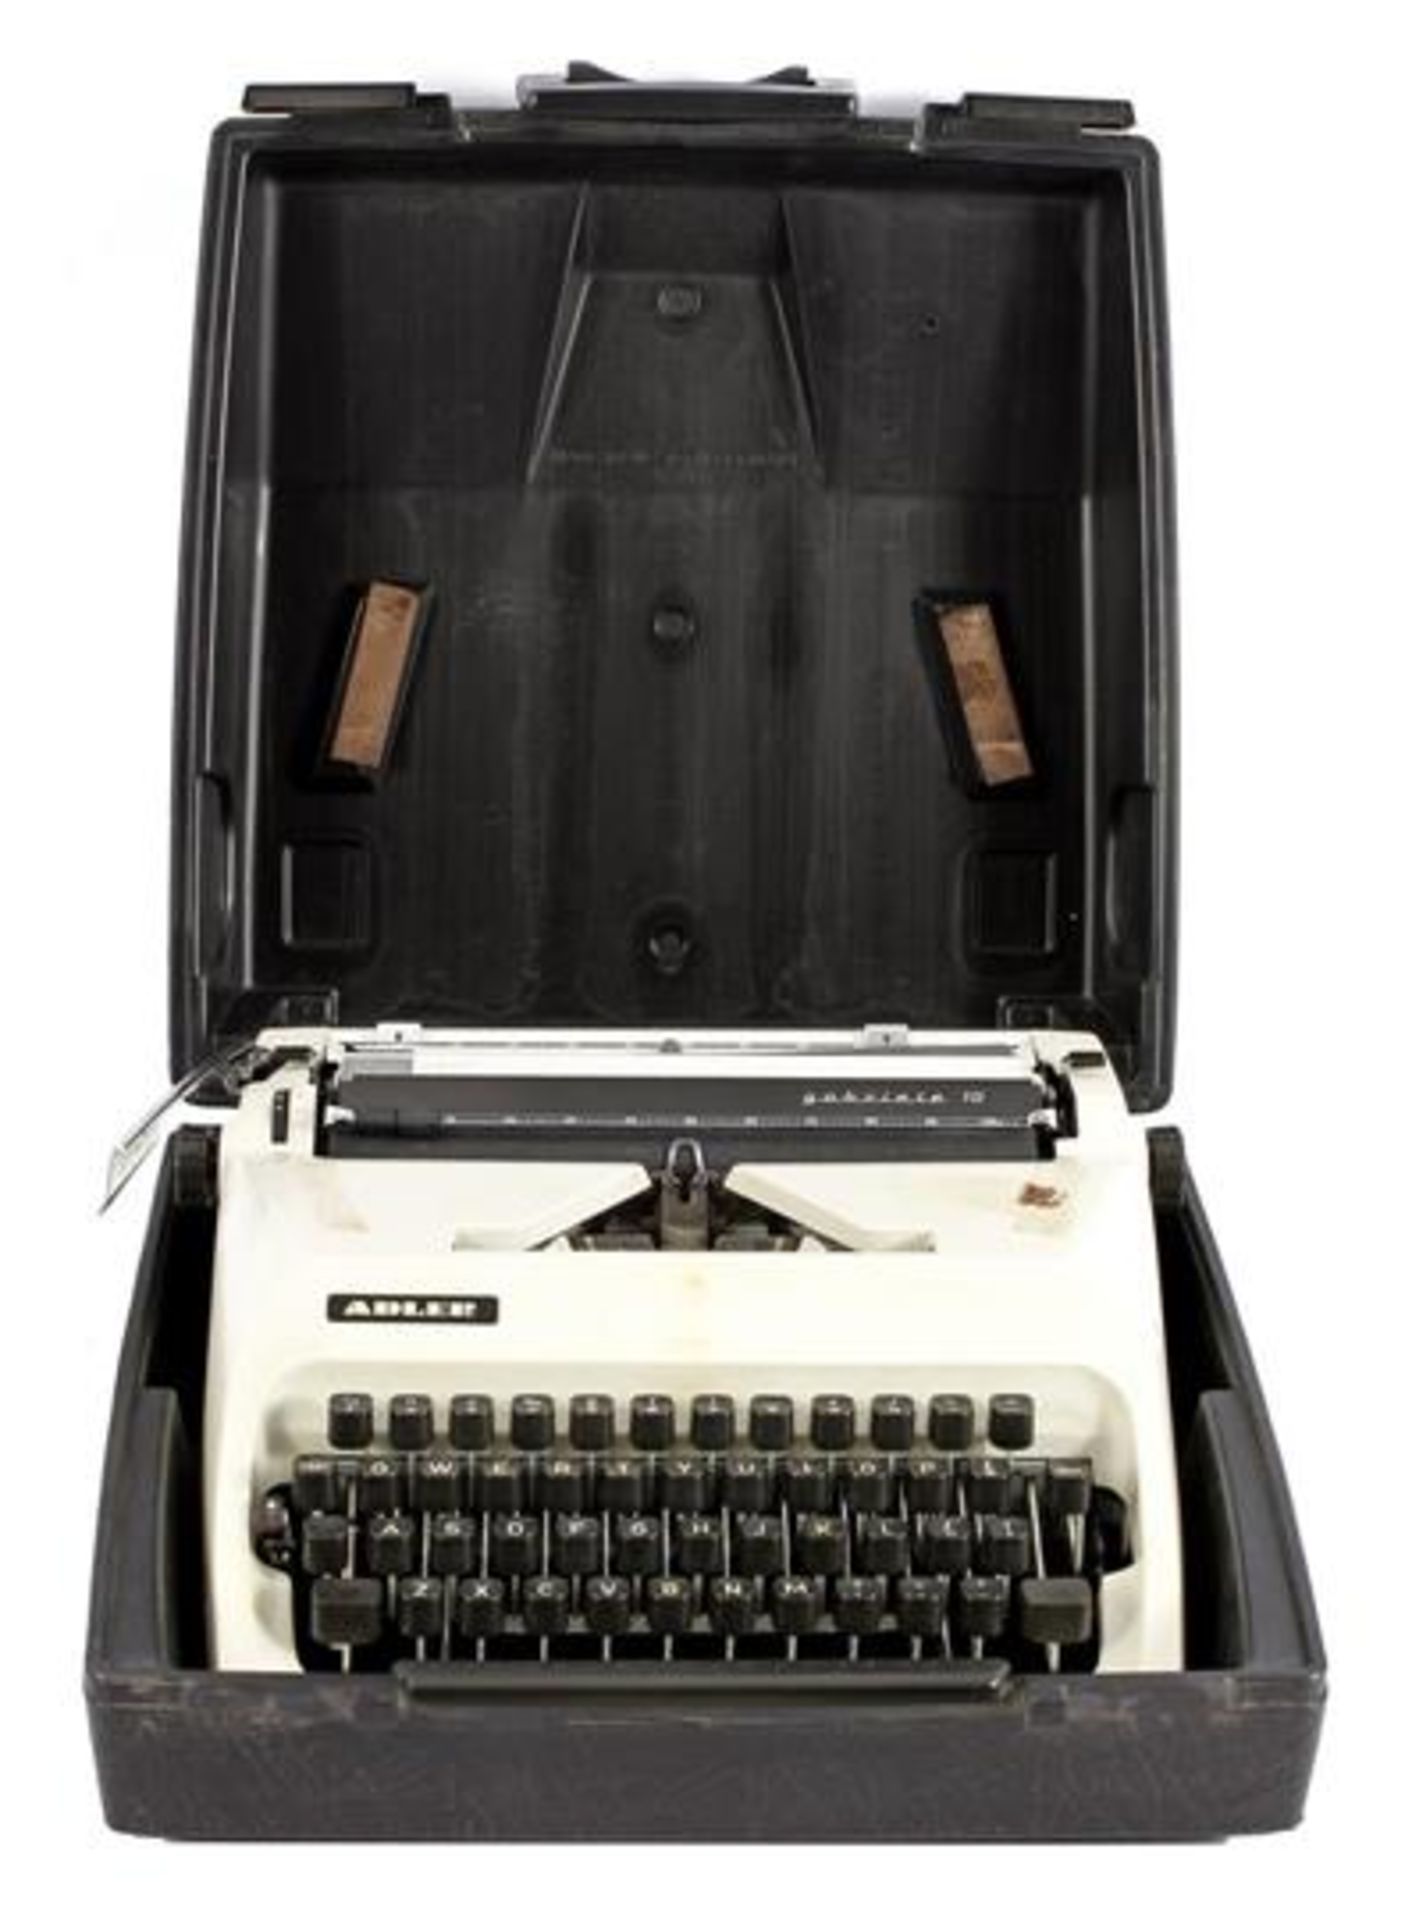 Adler Gabriele 10 typewriter in case